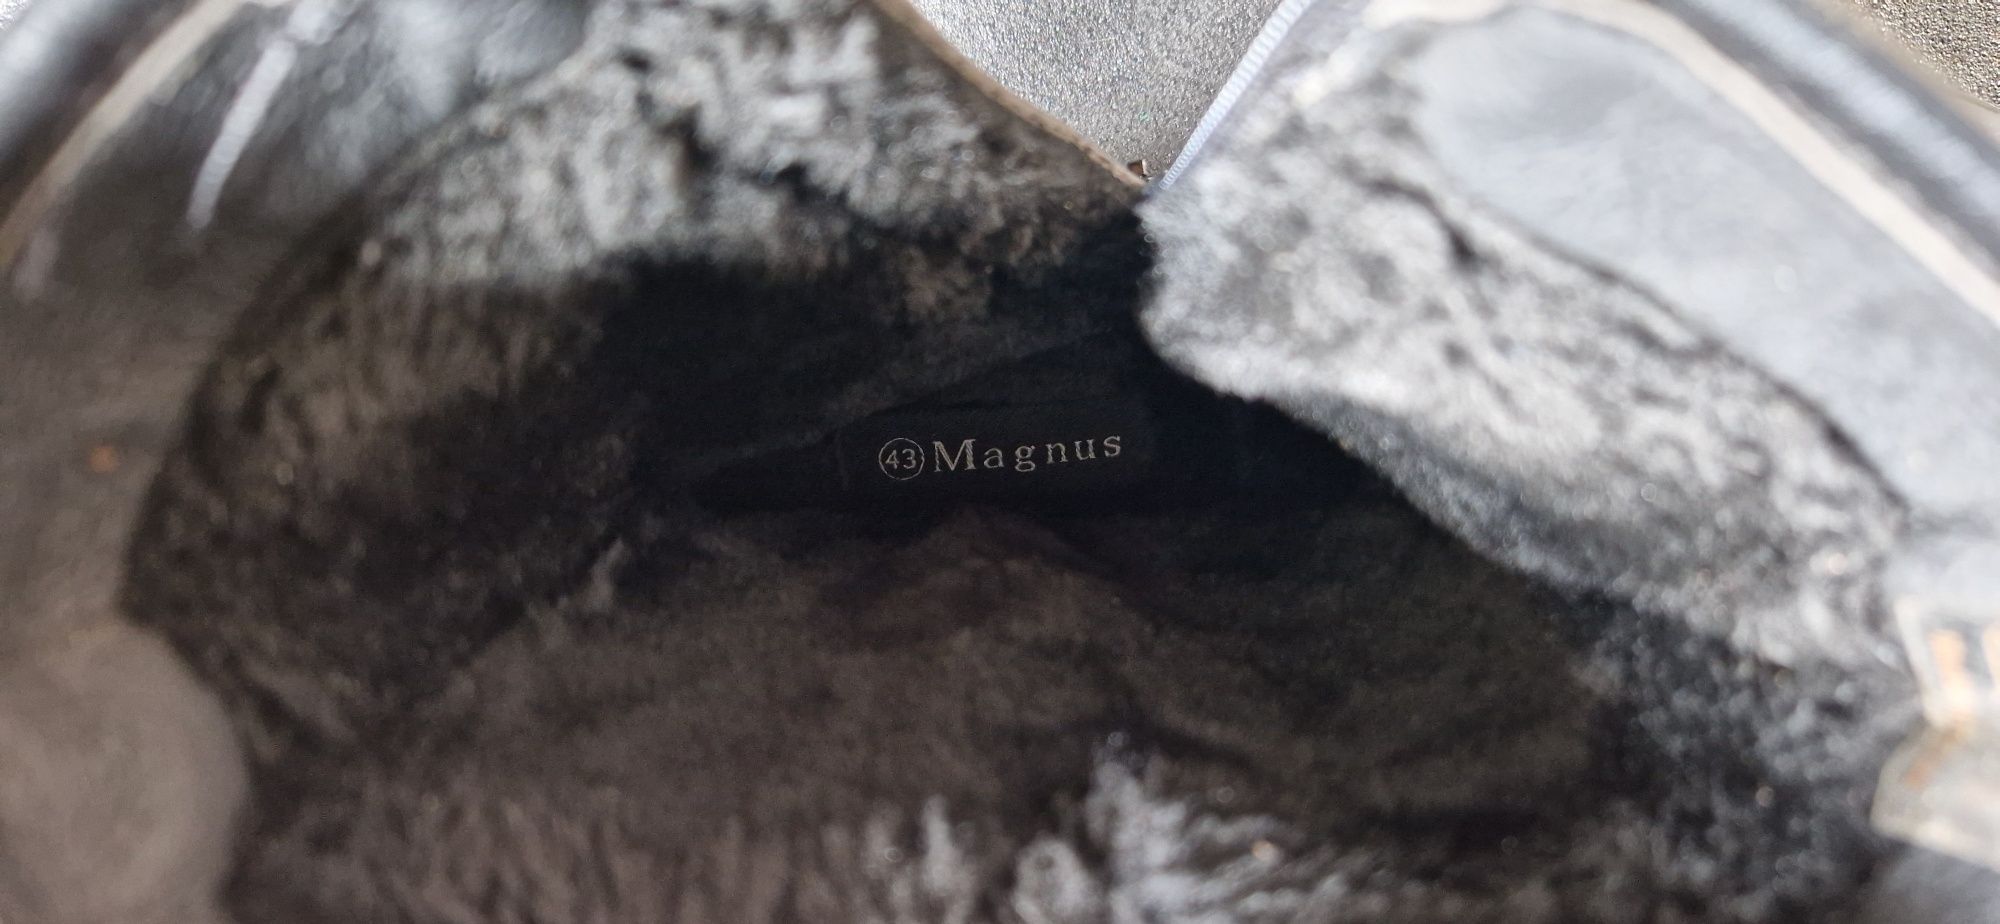 Męskie buty ocieplane Magnus.